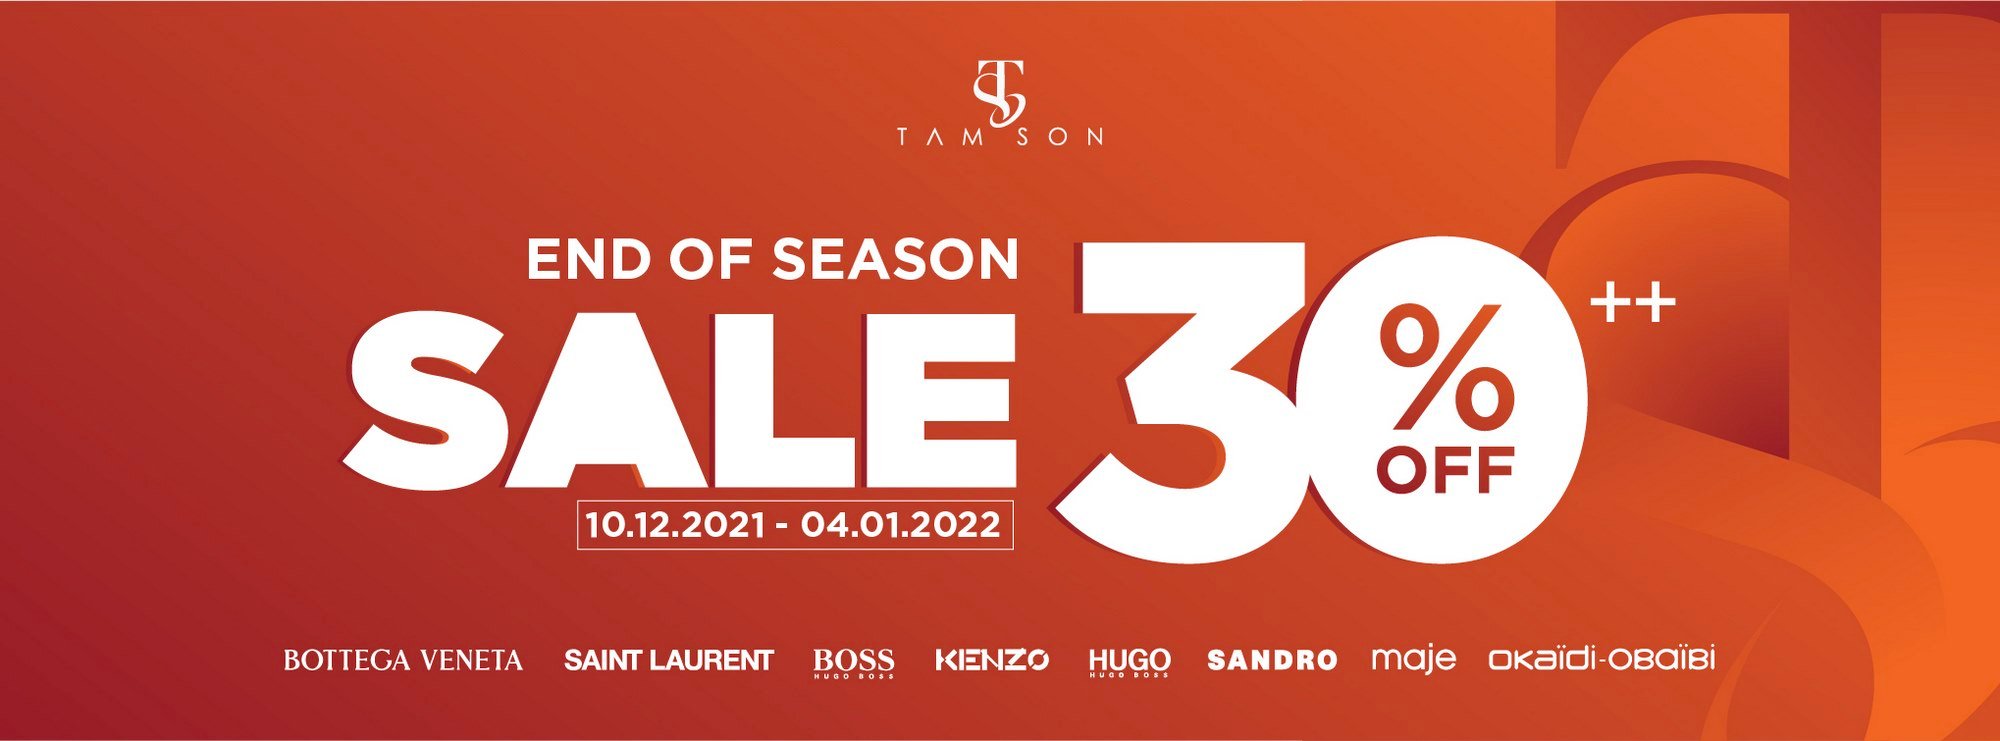 End Of Season Sale FW21 - Tamson 1